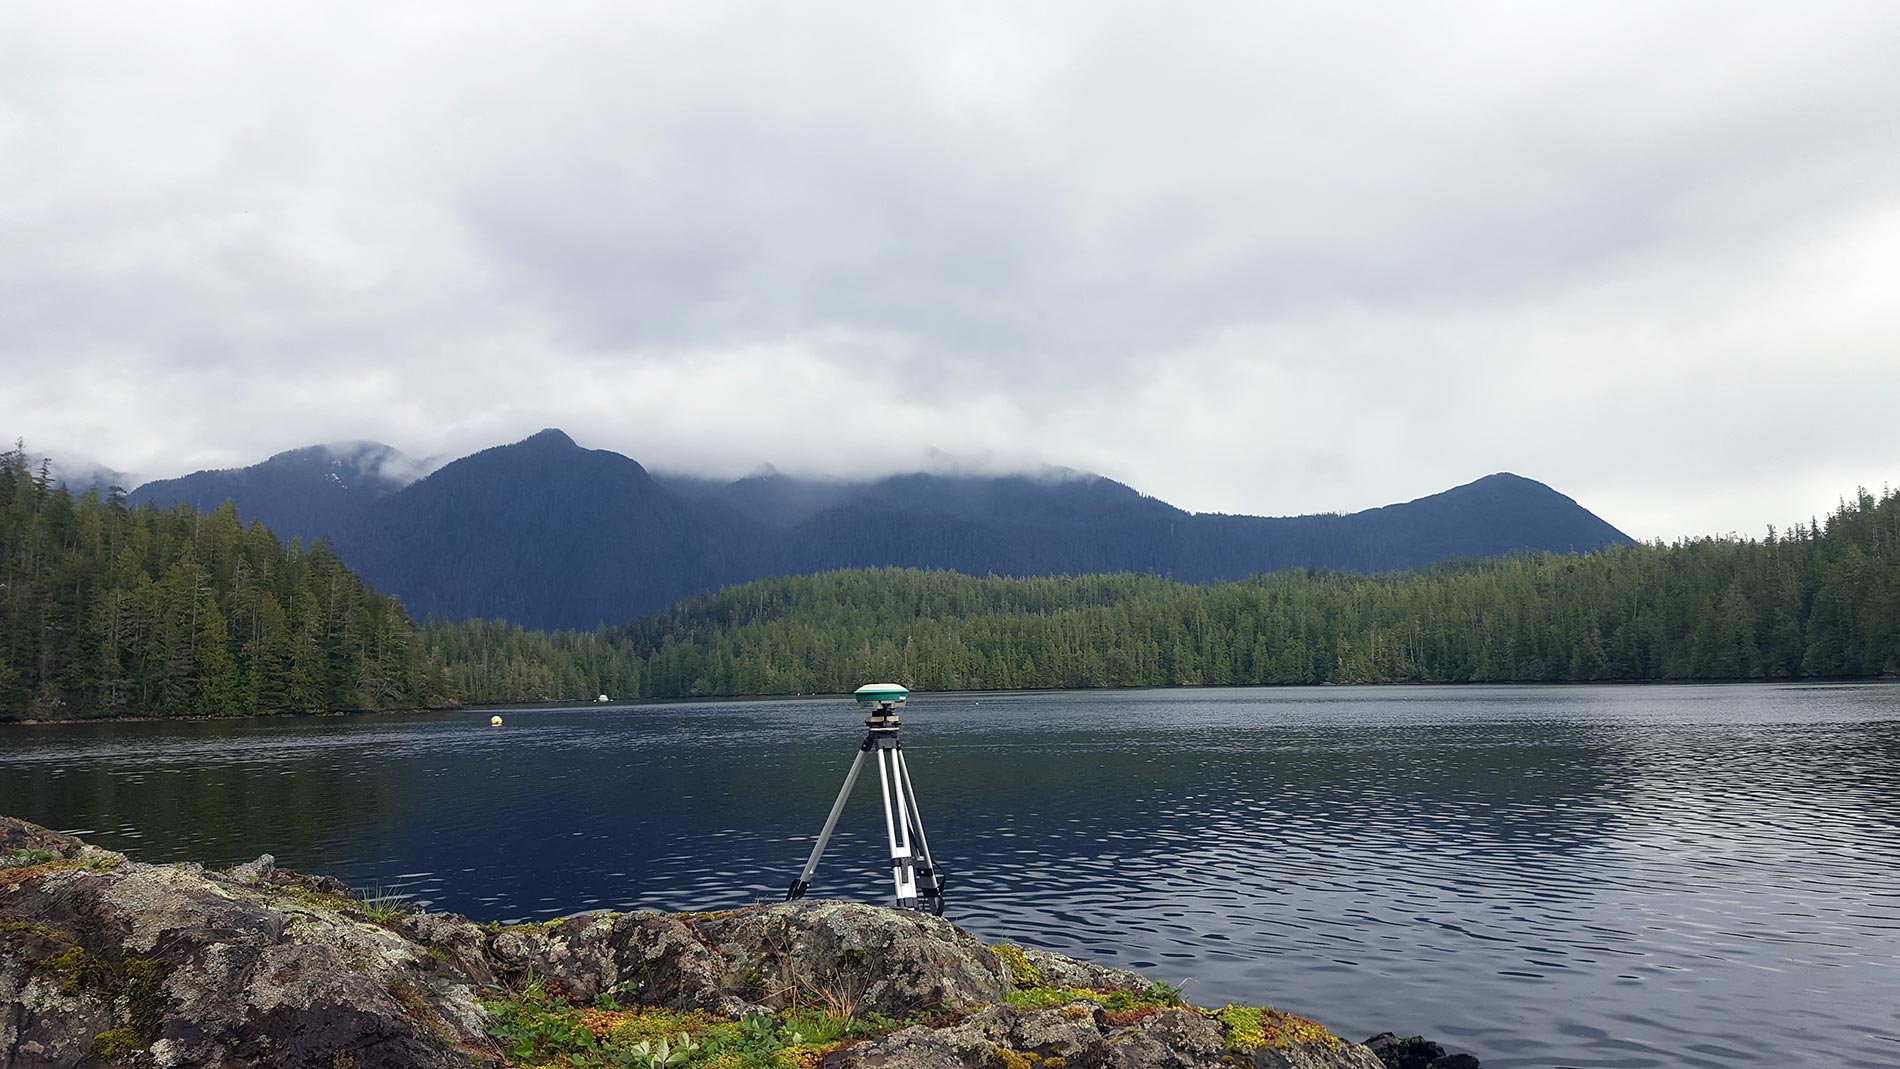 Land surveying equipment and lake